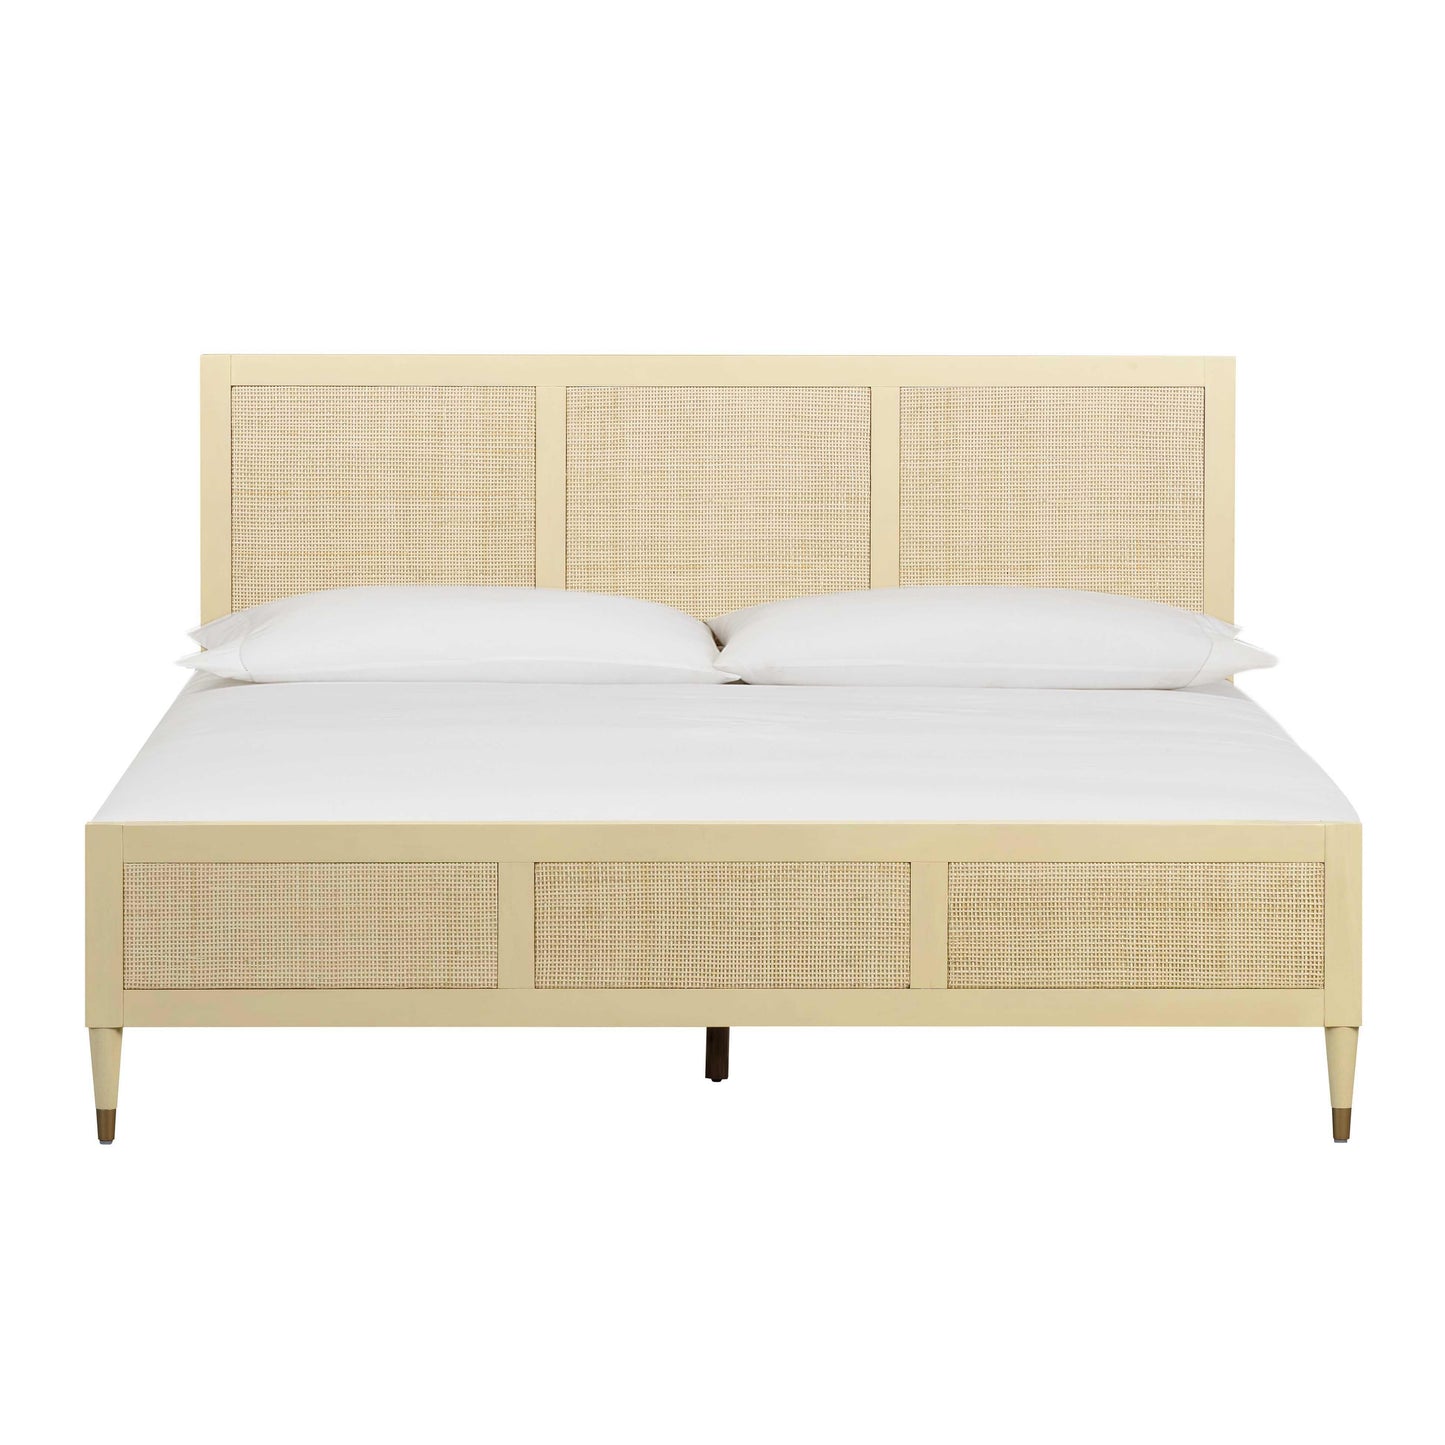 Tov Furniture Sierra Buttermilk King Bed